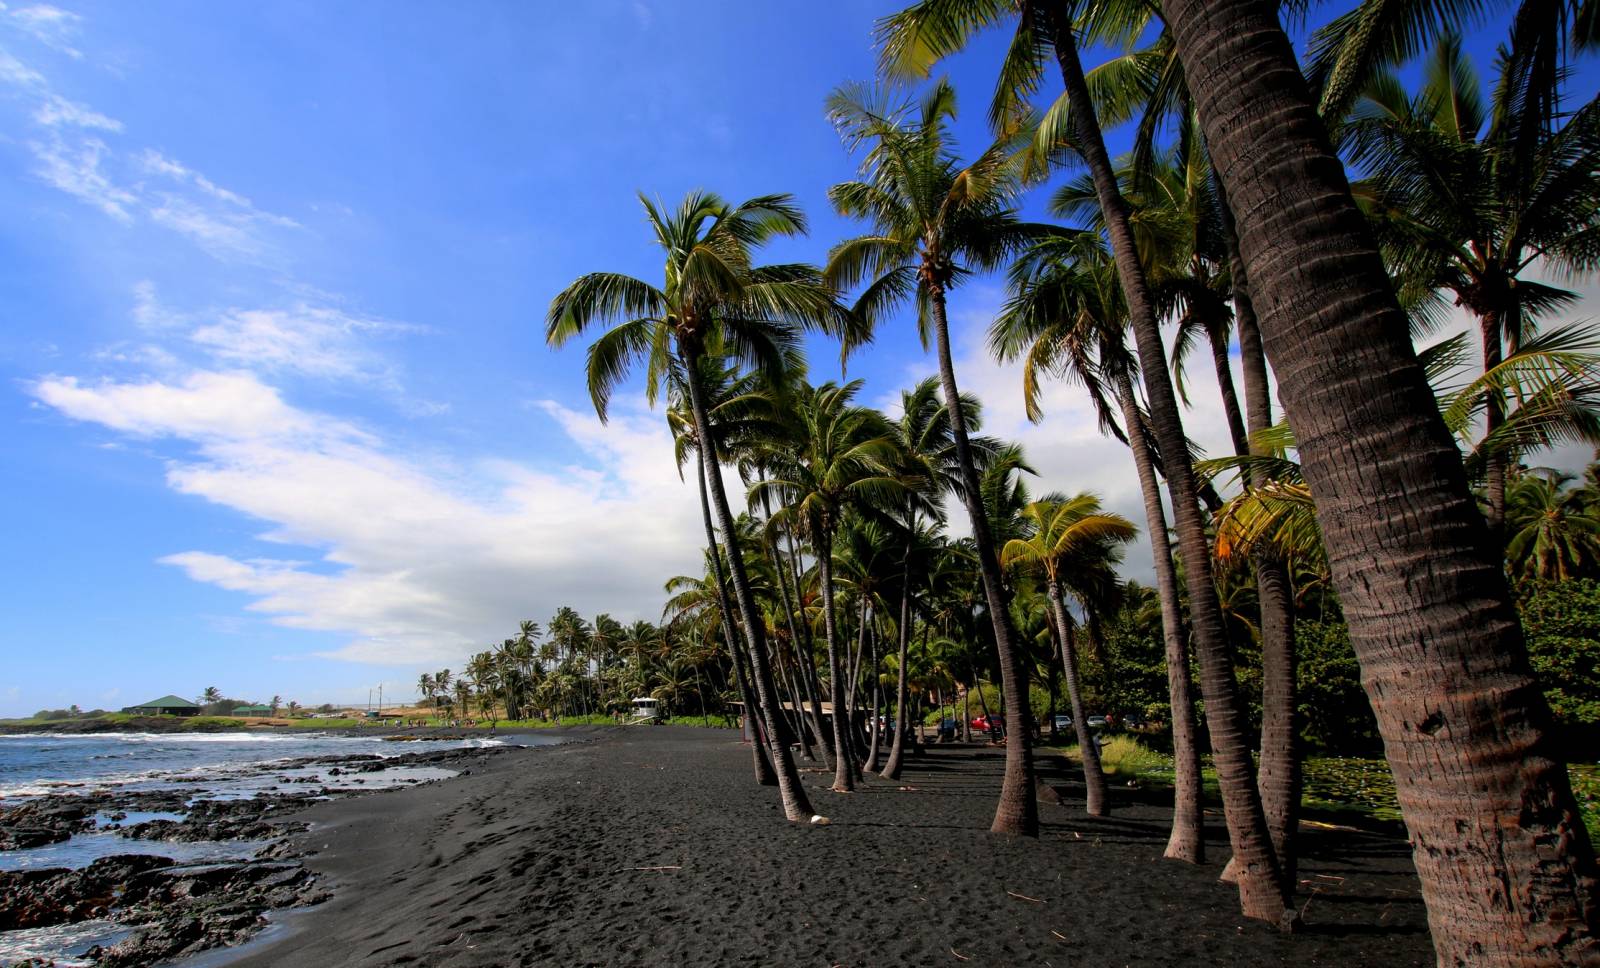 Black sand beach, tall palms and blue skies